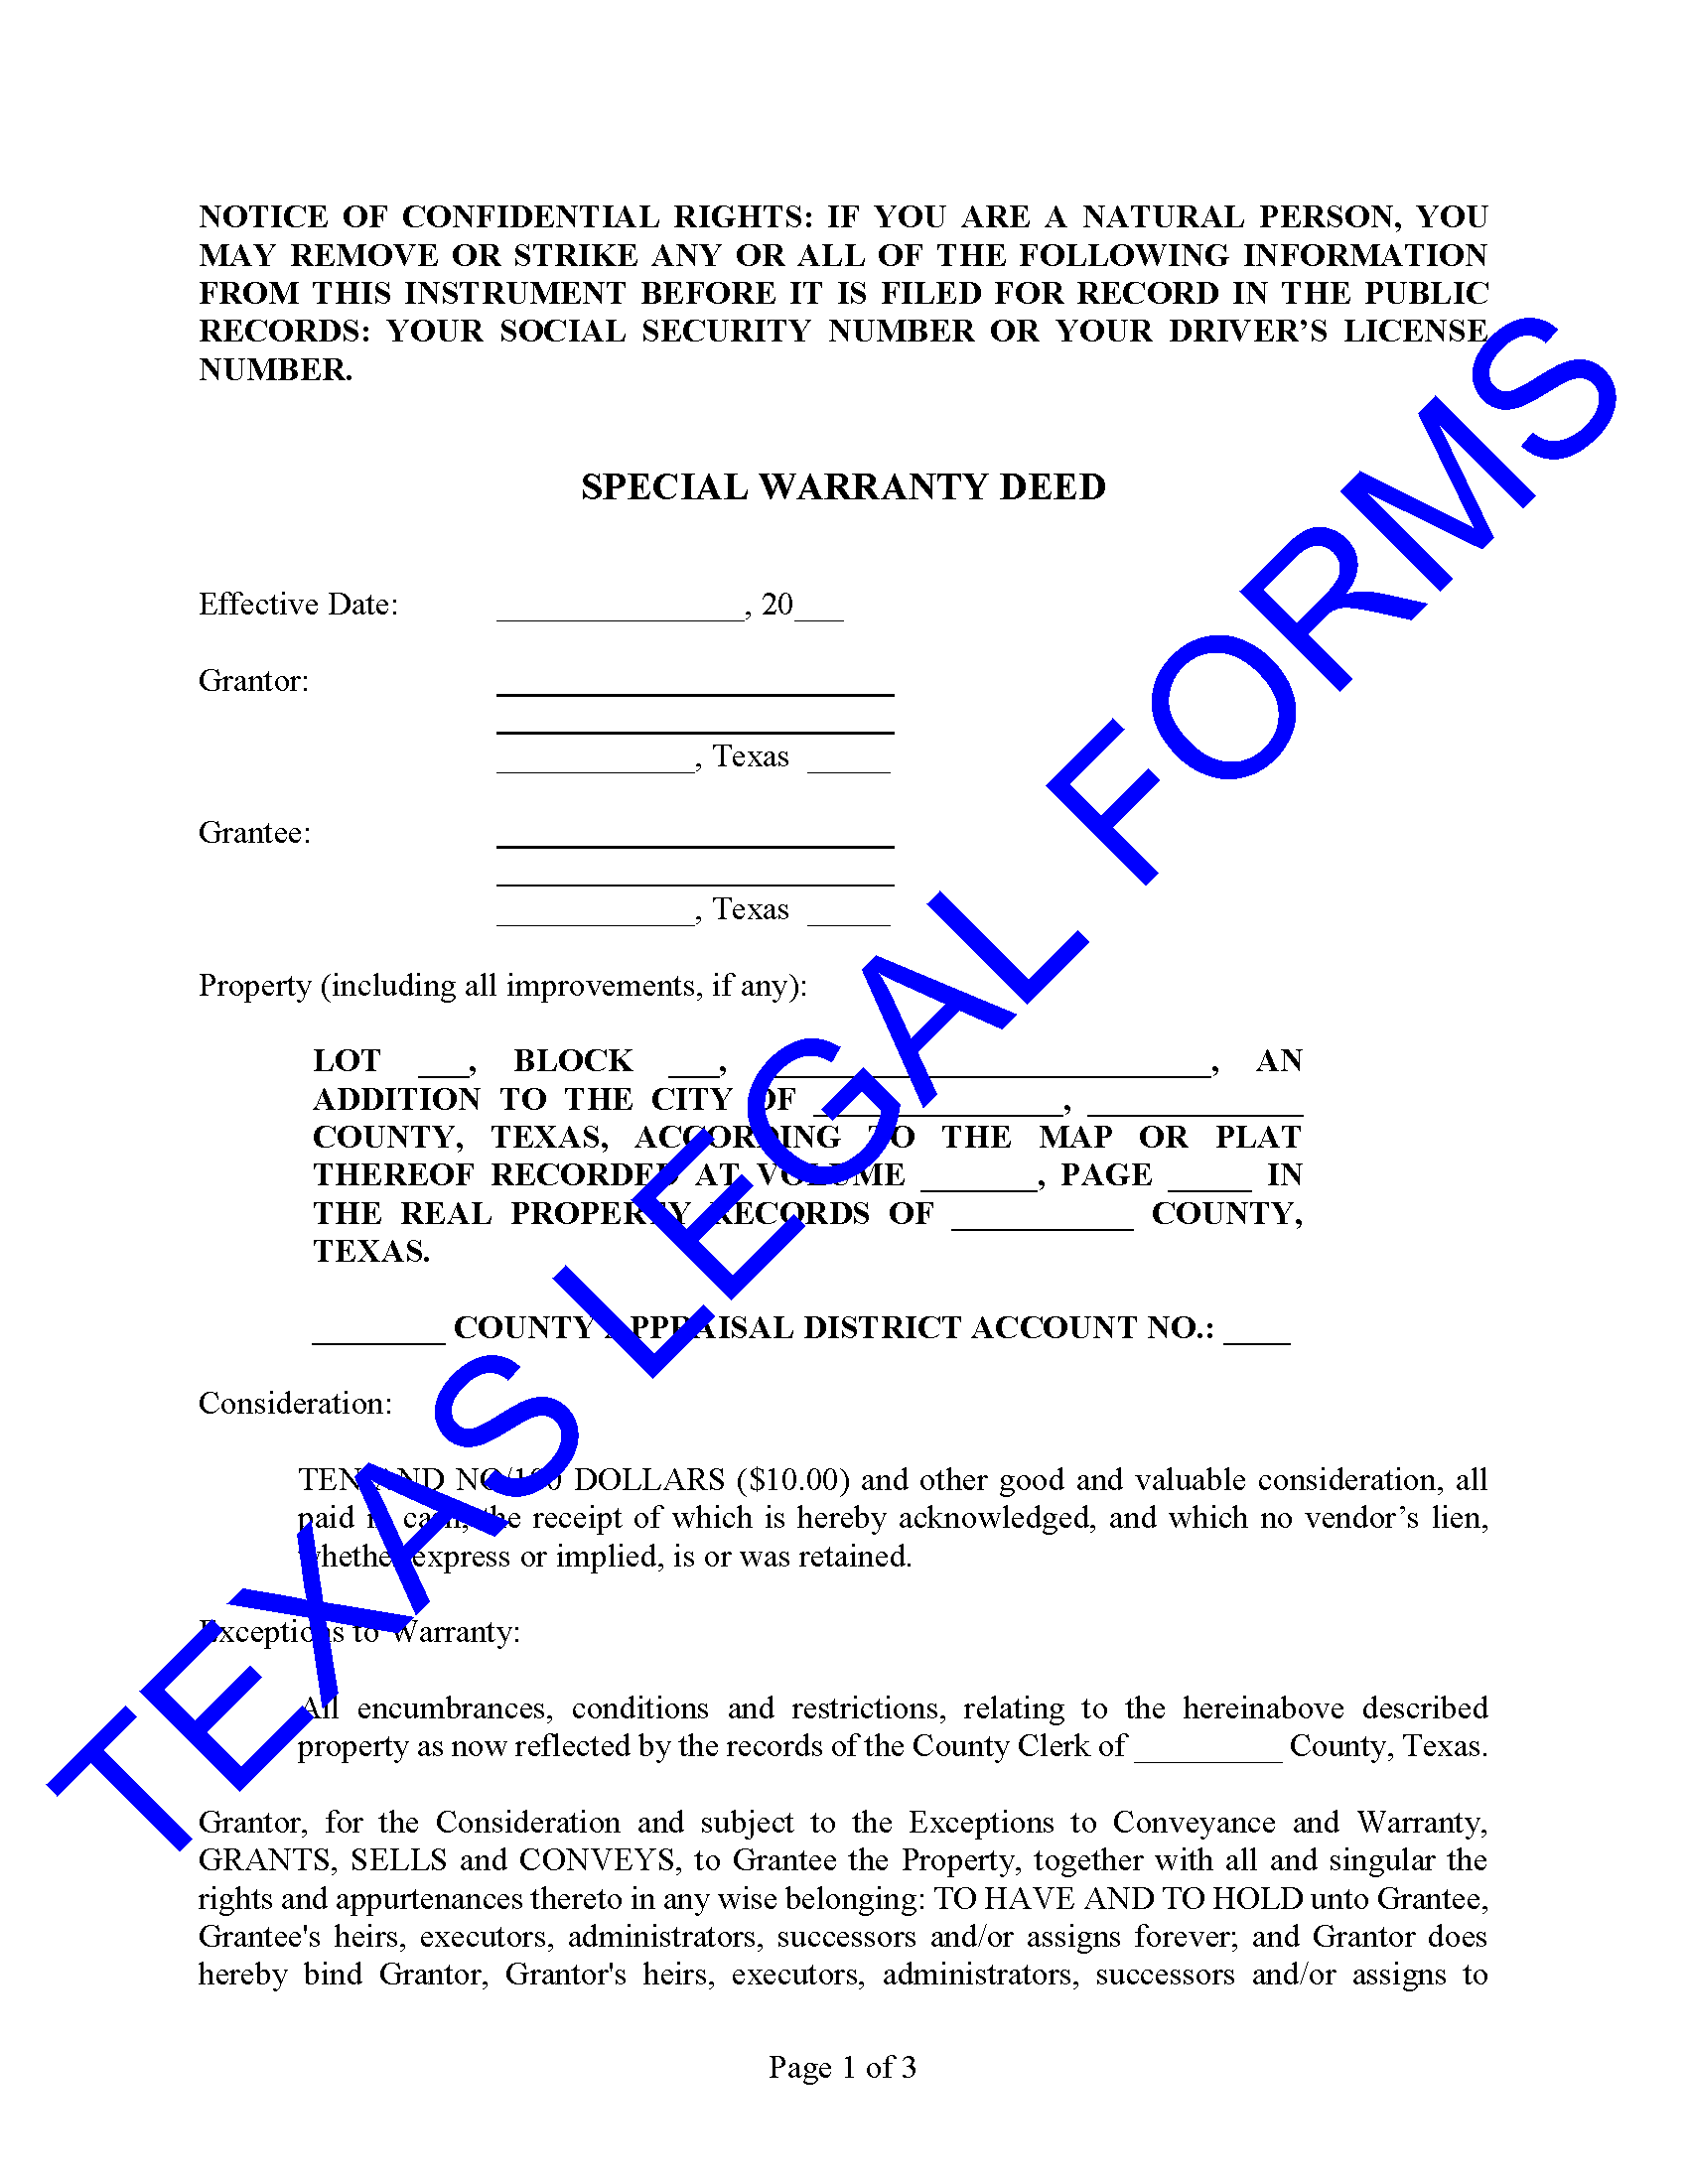 special-warranty-deed-joint-tenancy-survivorship-agreement-texas